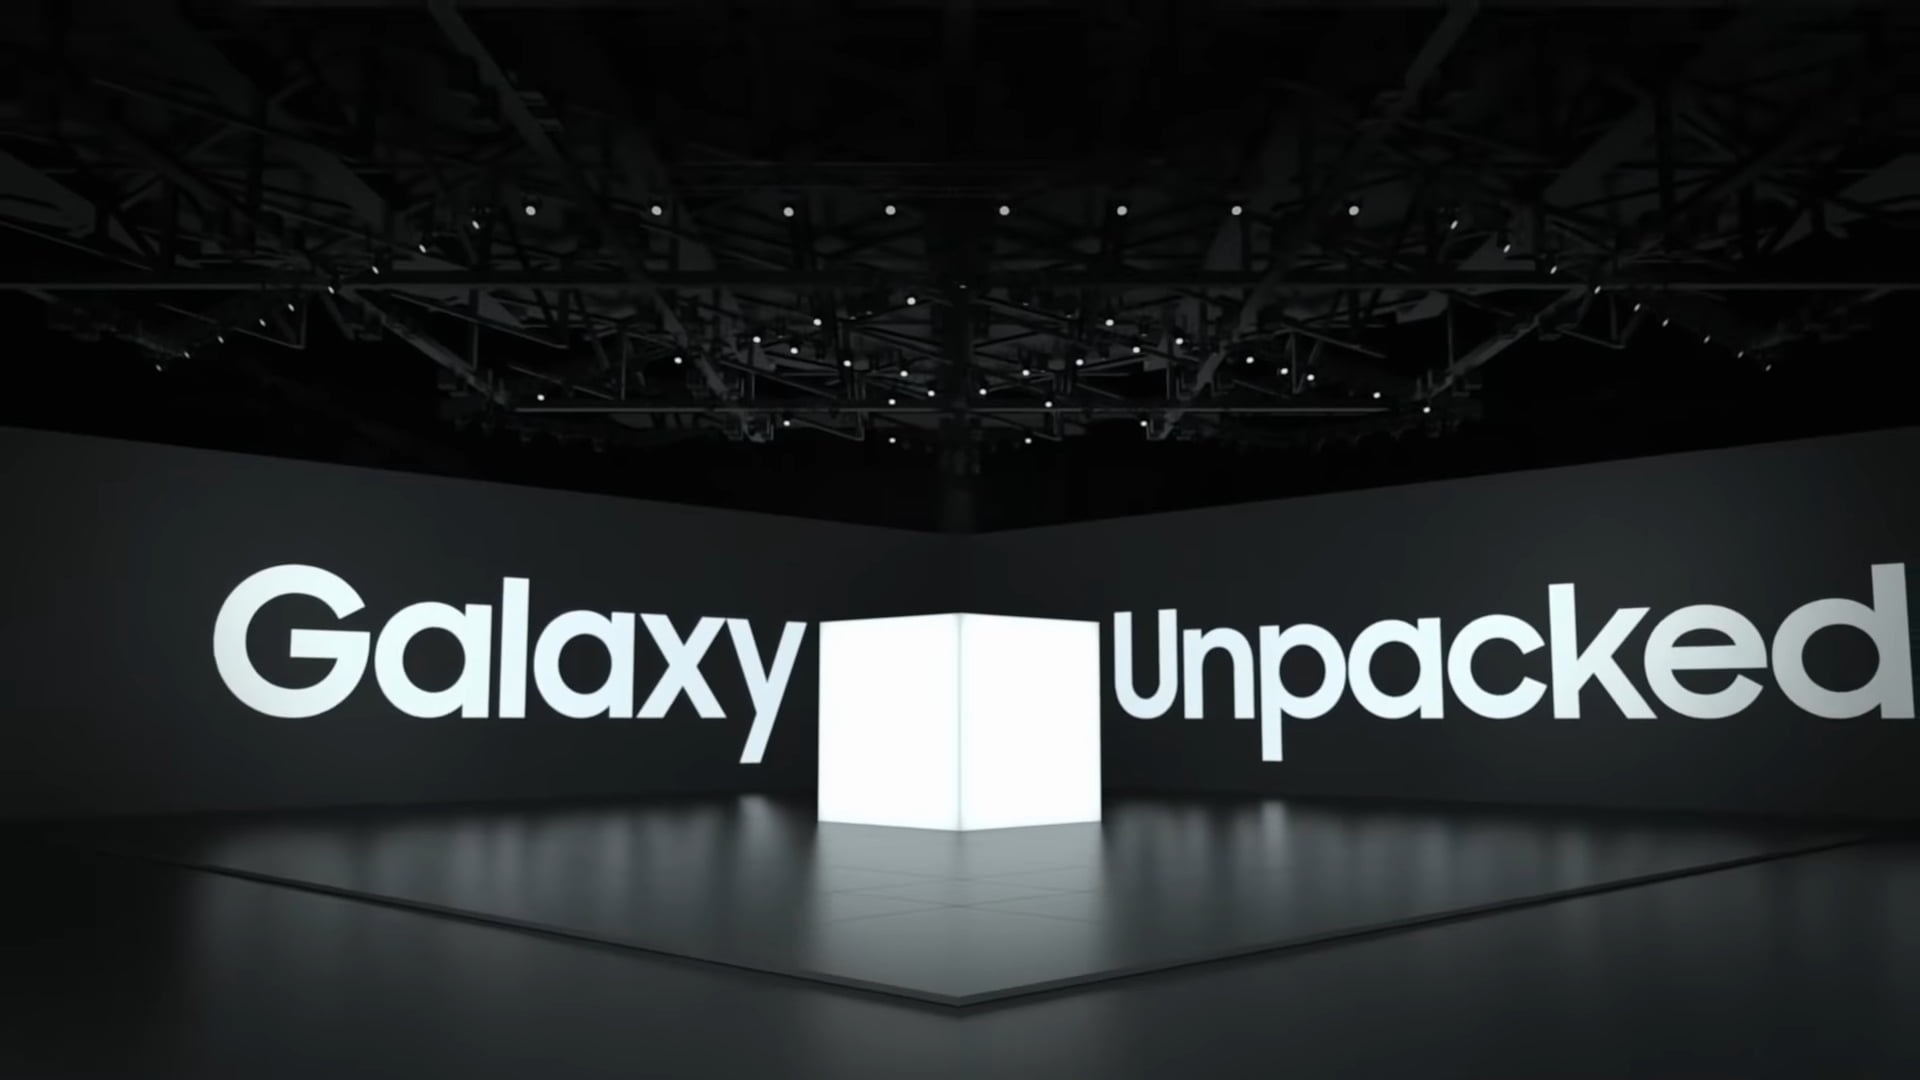 Galaxy Unpacked 2022